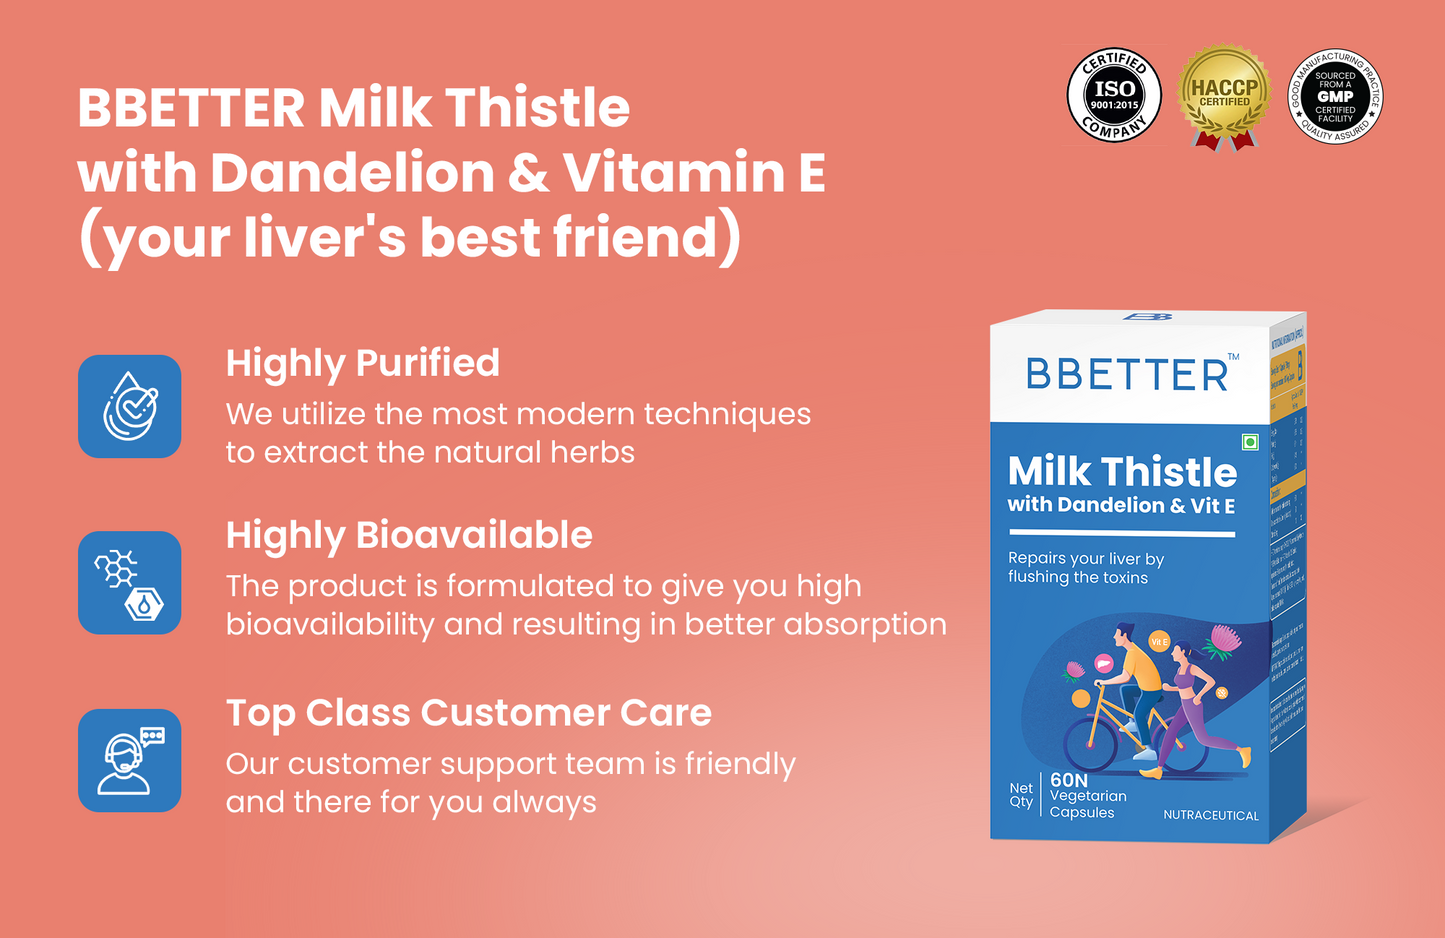 BBETTER Milk Thistle with Dandelion & Vit E